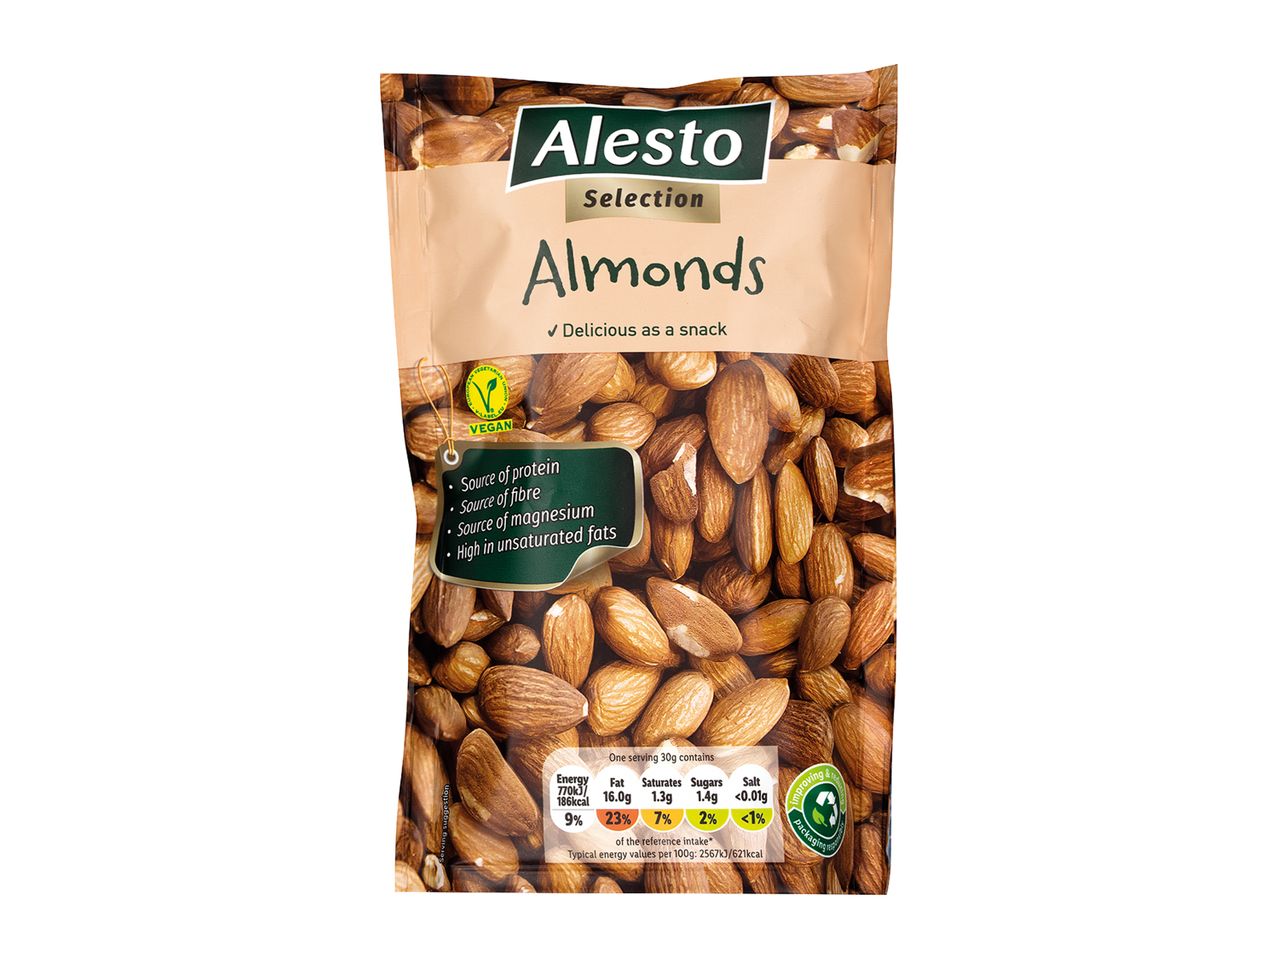 Go to full screen view: Alesto Almonds - Image 1